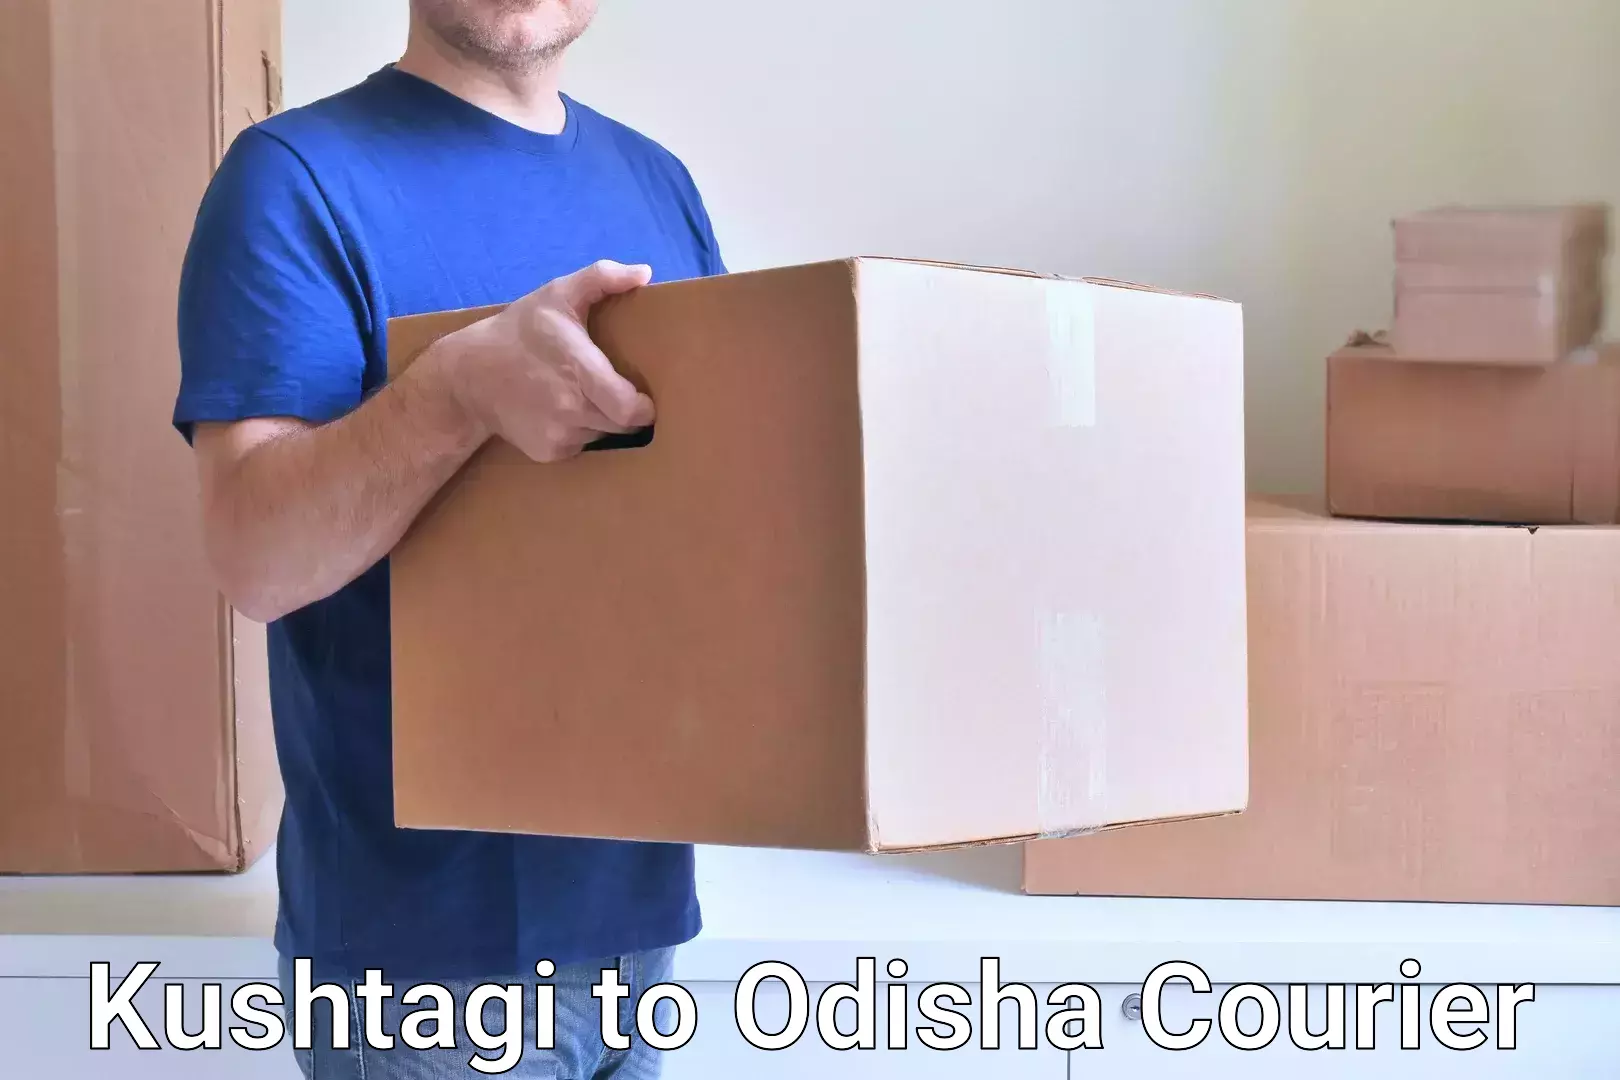 Global courier networks Kushtagi to Odisha